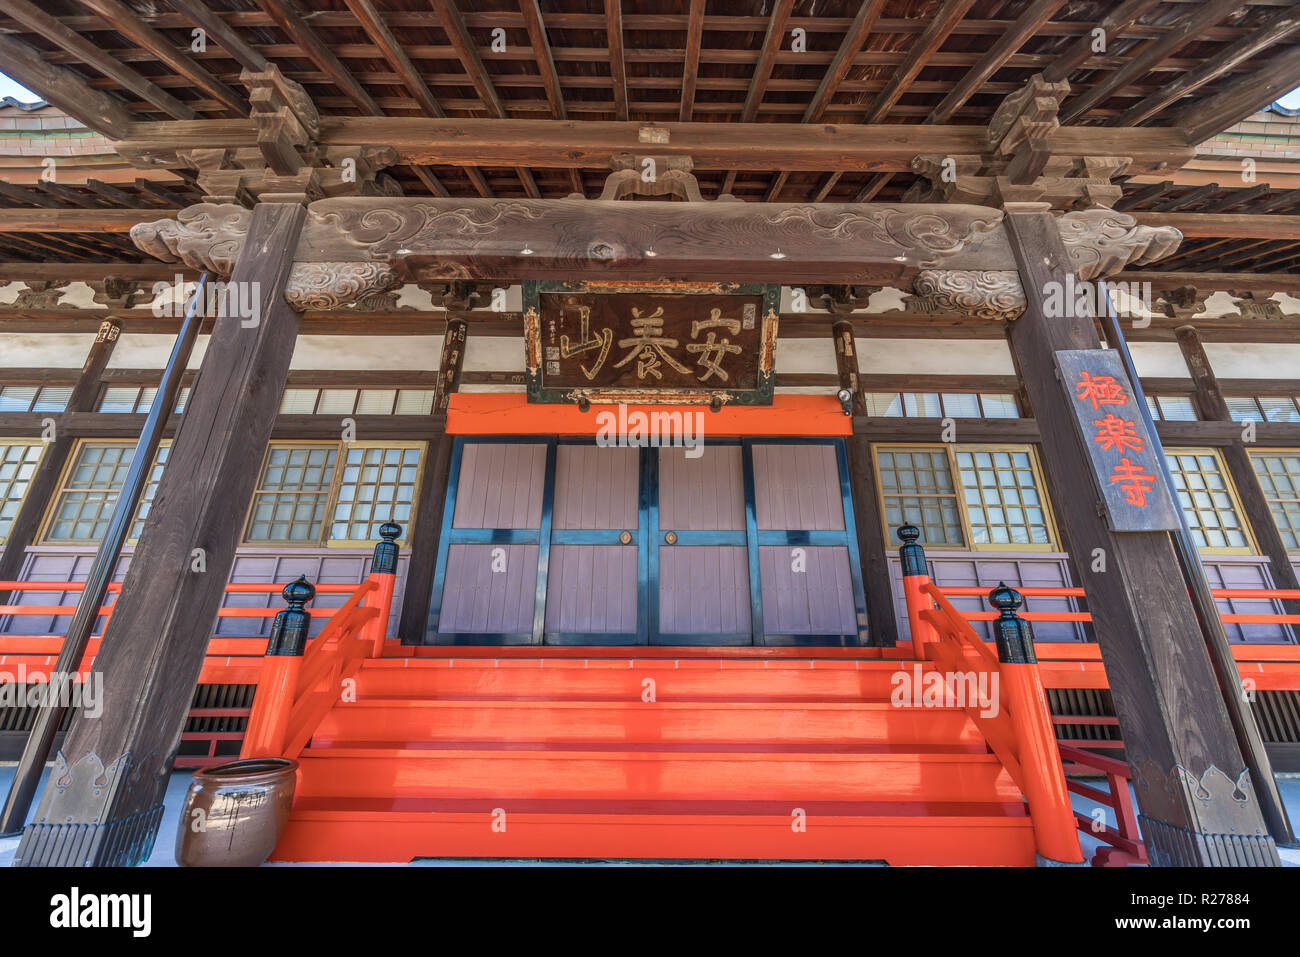 Kanazawa, Ishikawa Japan - August 22, 2018 : Entrance to Honden Main hall of Joan-ji temple. Jodo sect Buddhist temple located in Teramachi district. Stock Photo